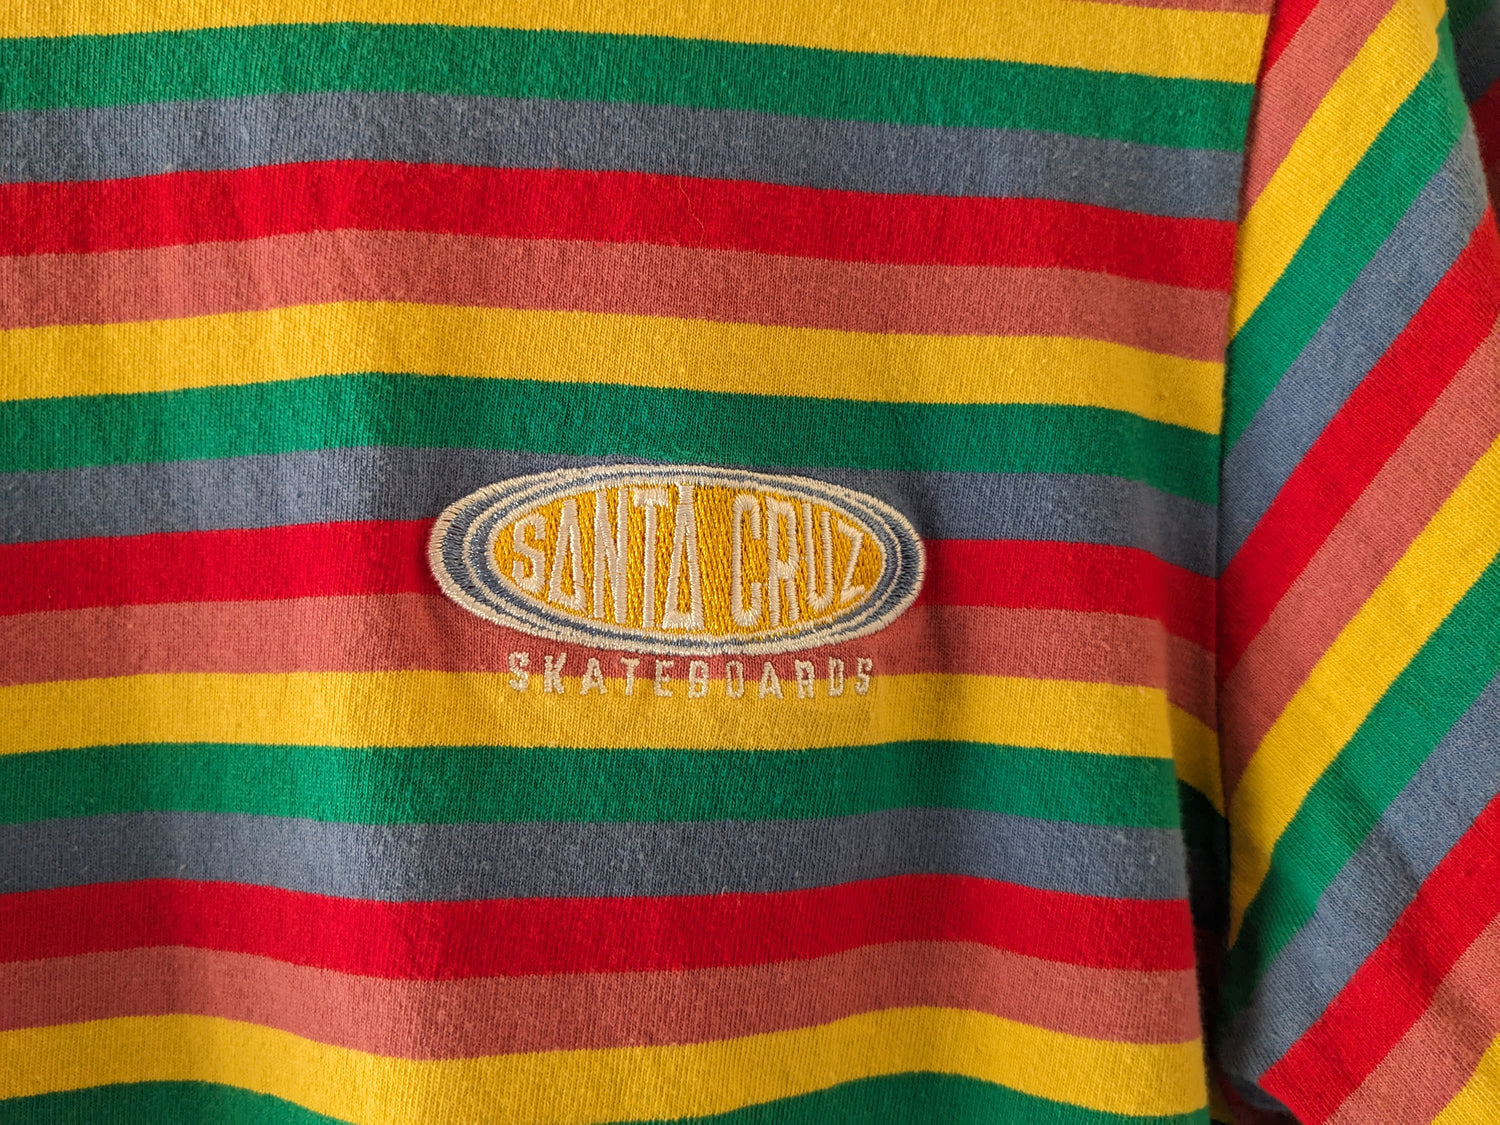 Santa Cruz Rainbow Stripes shirt embrodiery